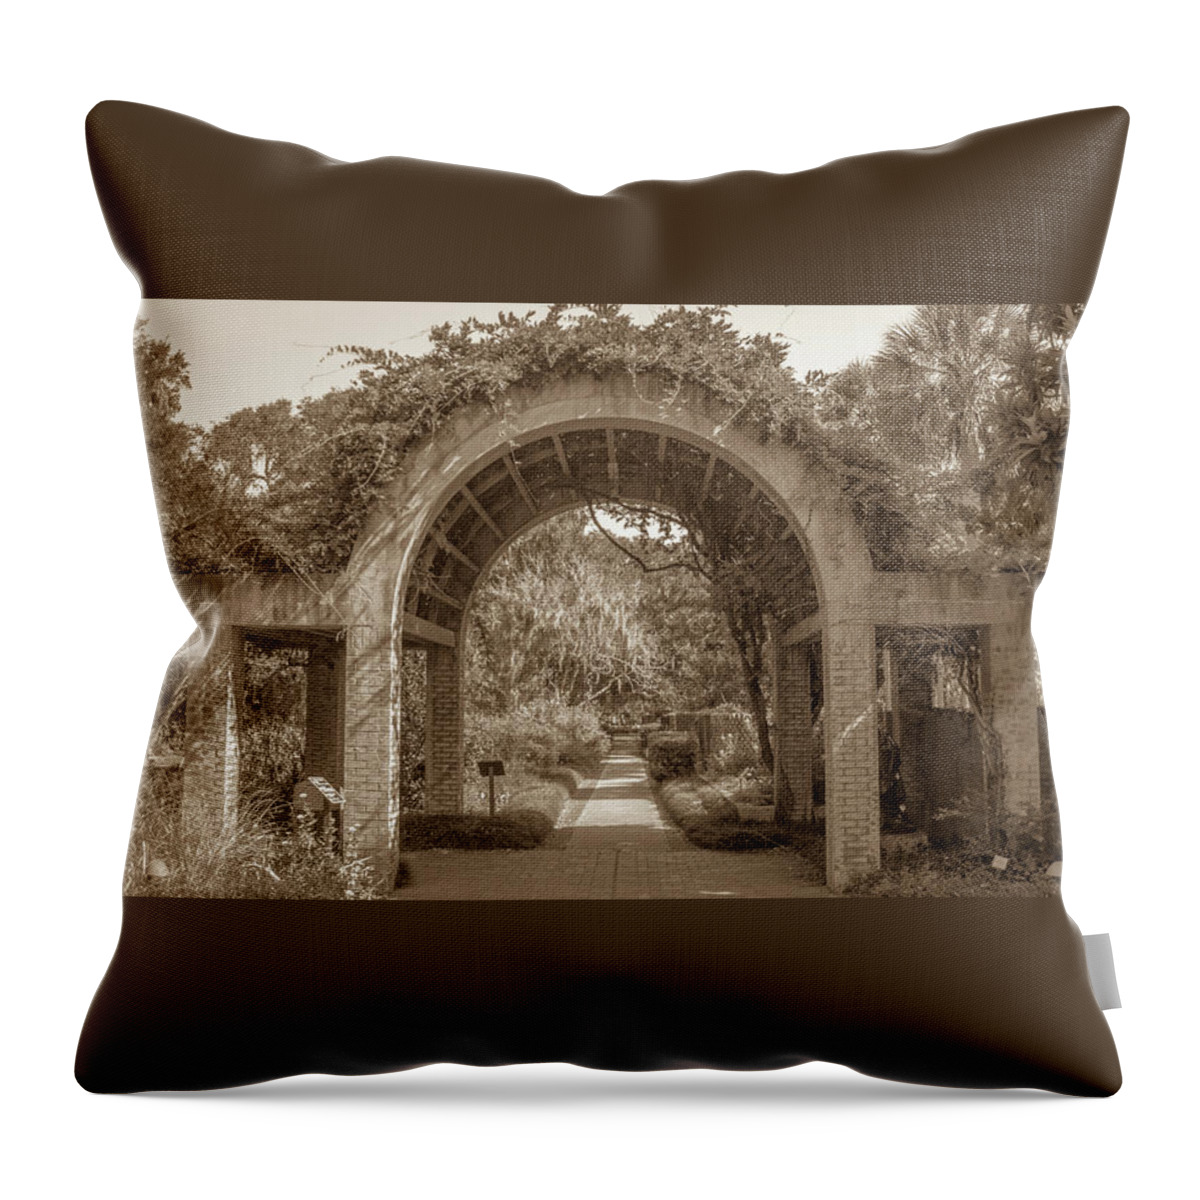 2017 Throw Pillow featuring the photograph Garden Arch by Darrell Foster